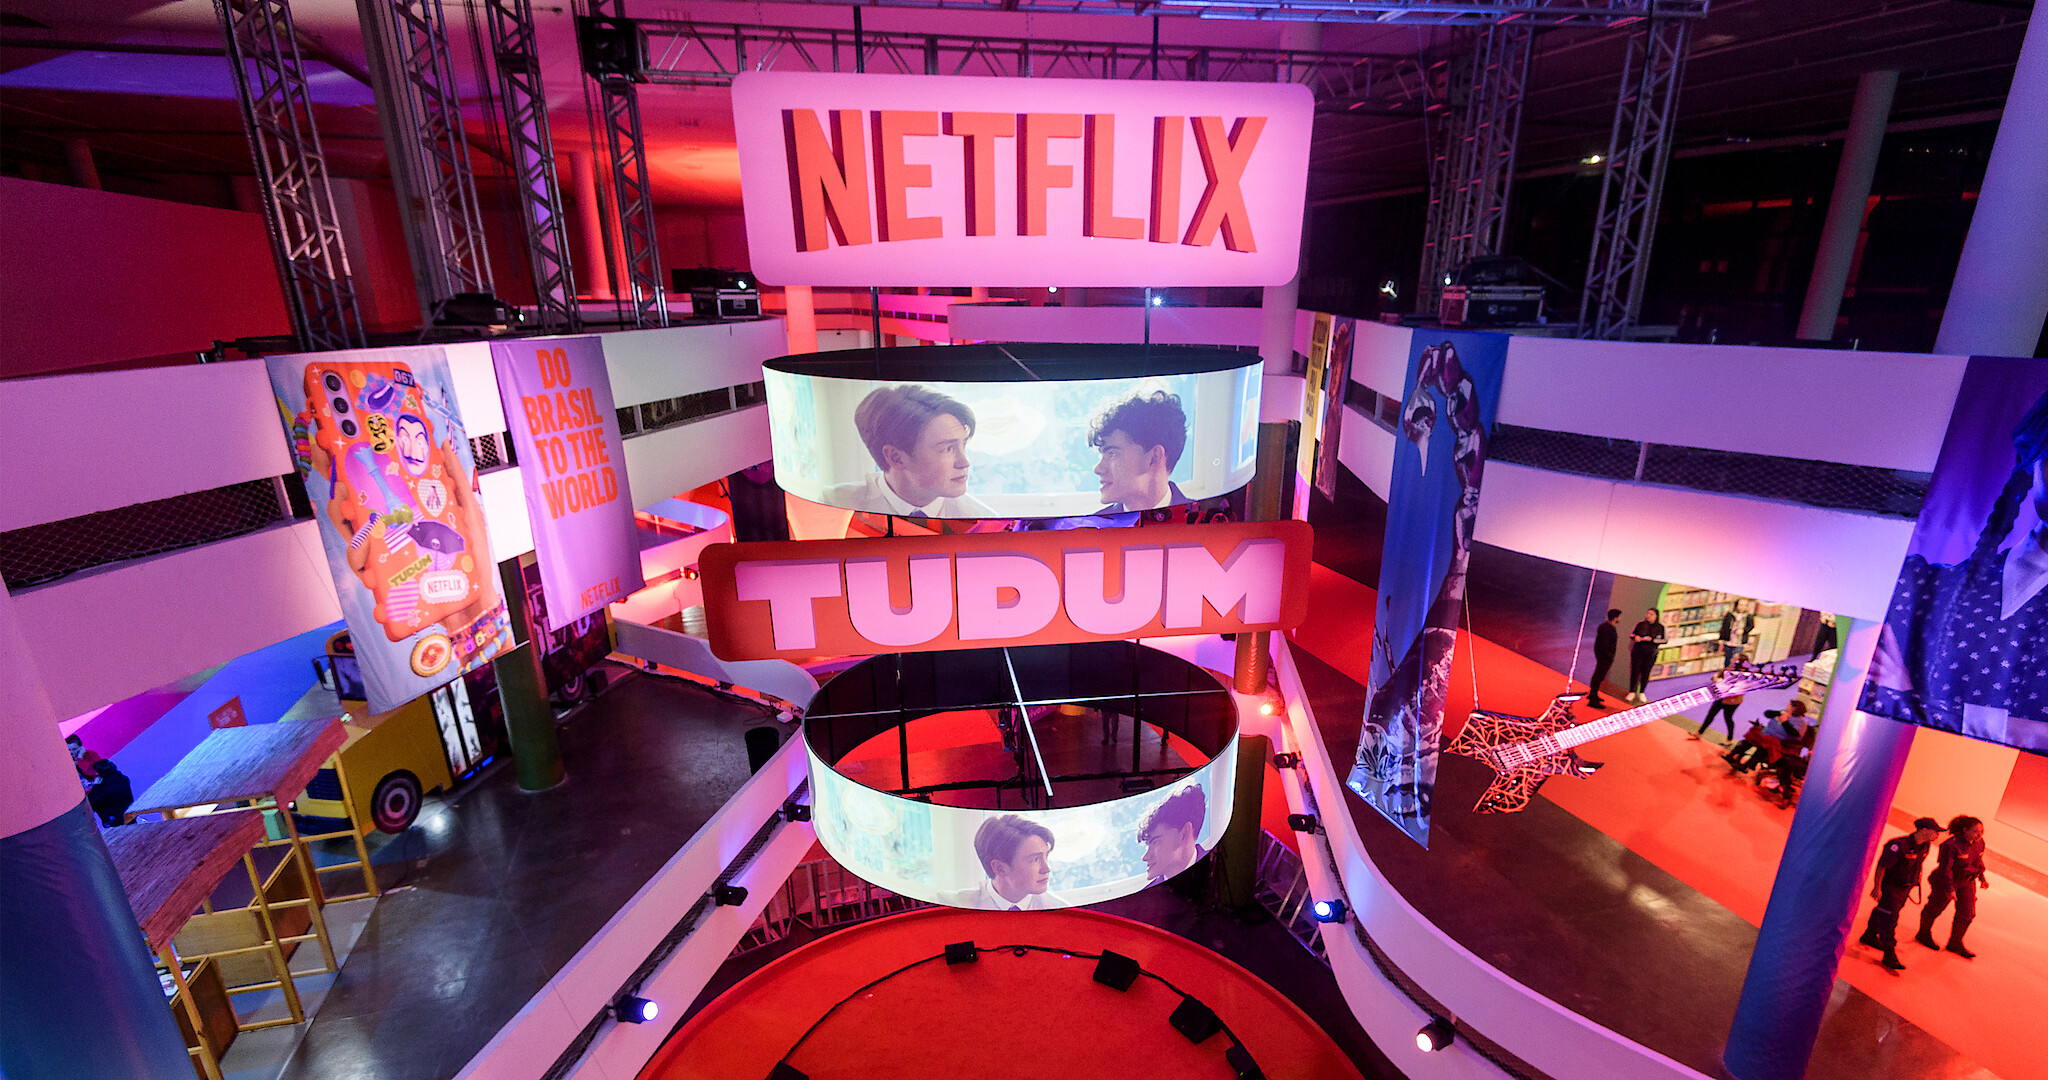 All of the Fan Experiences, Photo Ops, and Events at Netflix's Brazil  Showcase Tudum - Netflix Tudum